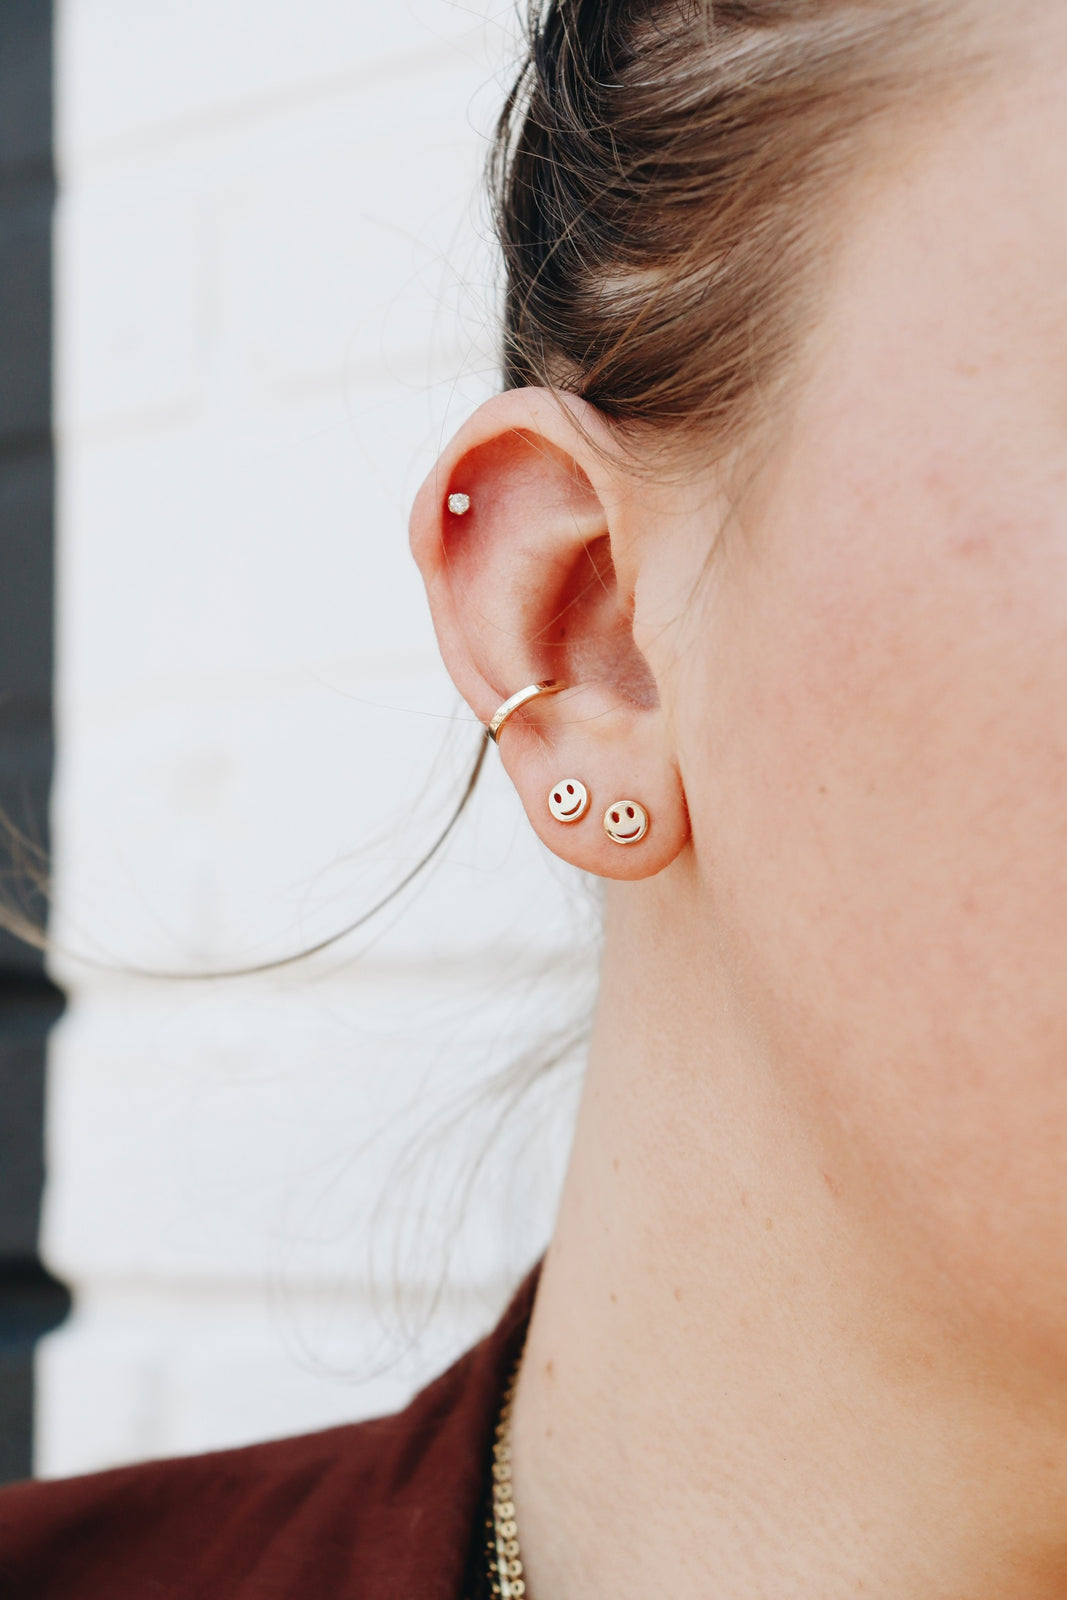 Tiny Happy Emoji Stud Earring